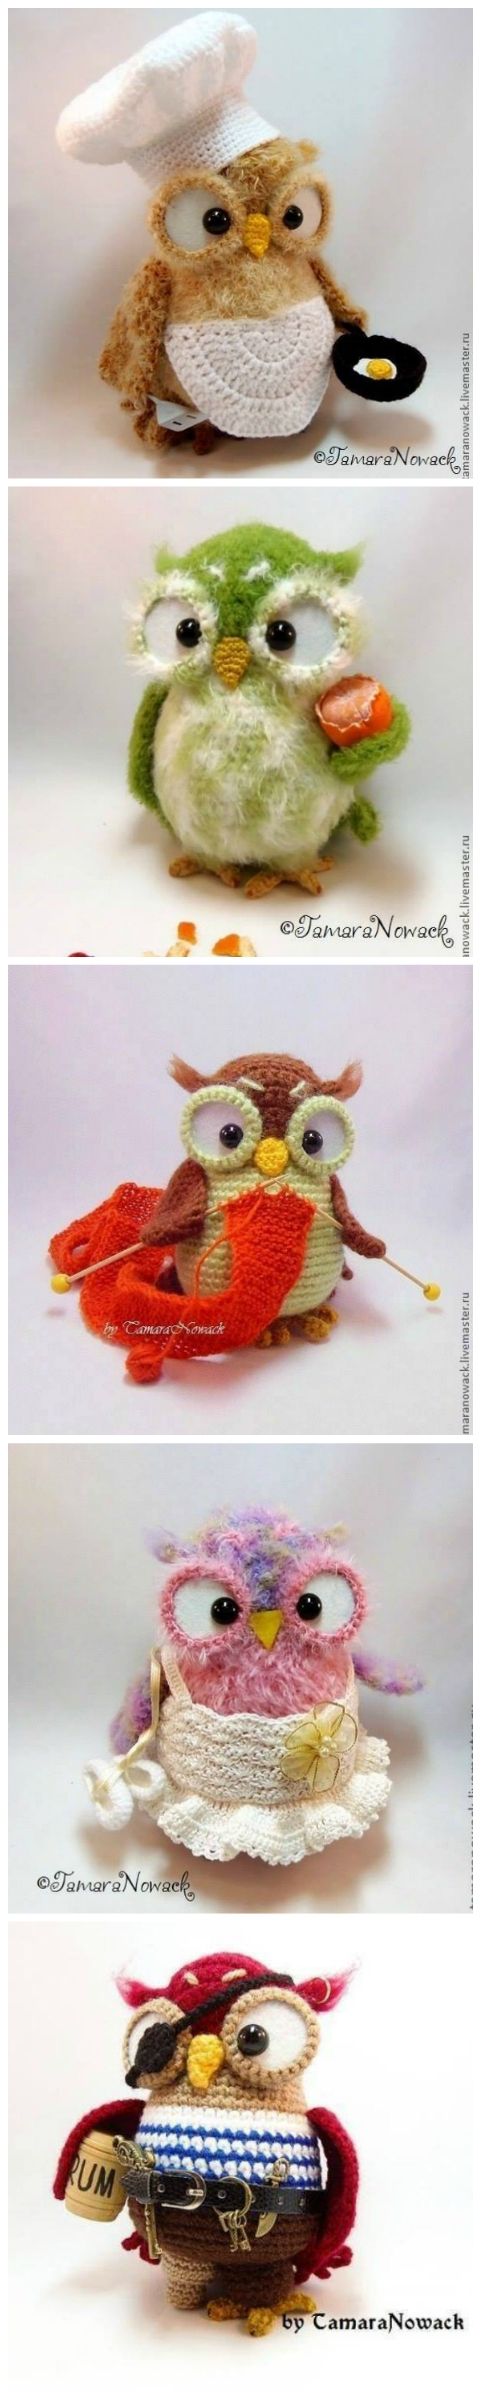 Owl Crochet Patterns by Tamara Nowack